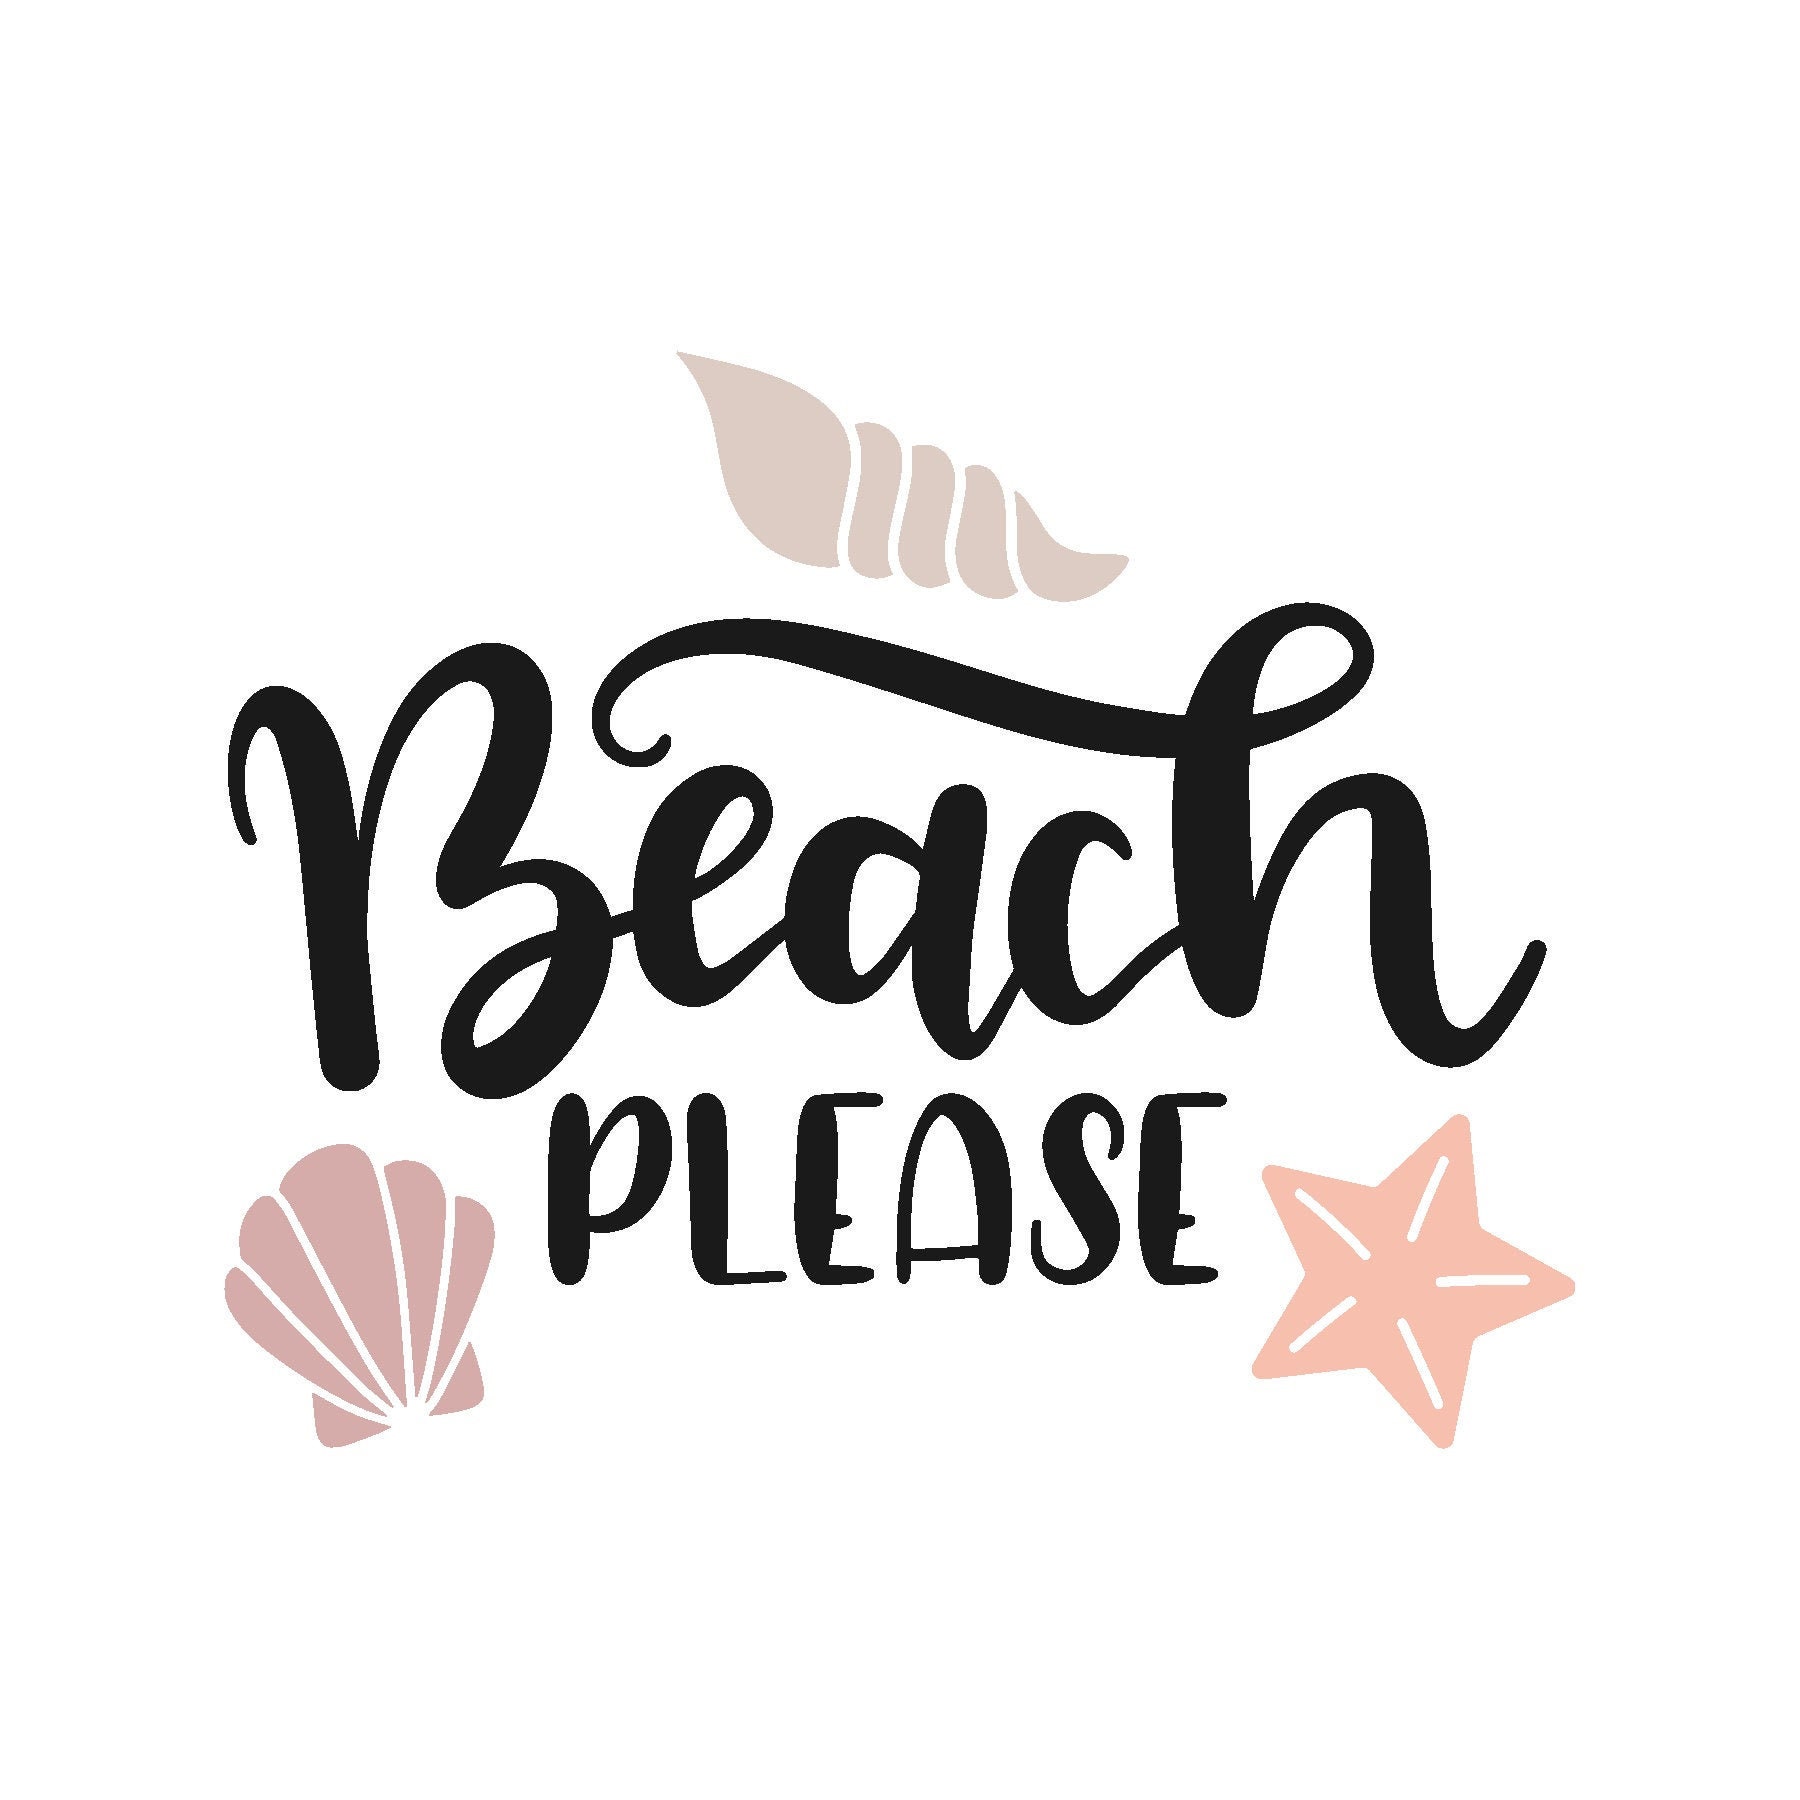 Beach Life в svg. Beach please перевод. Beach please. Бич плиз